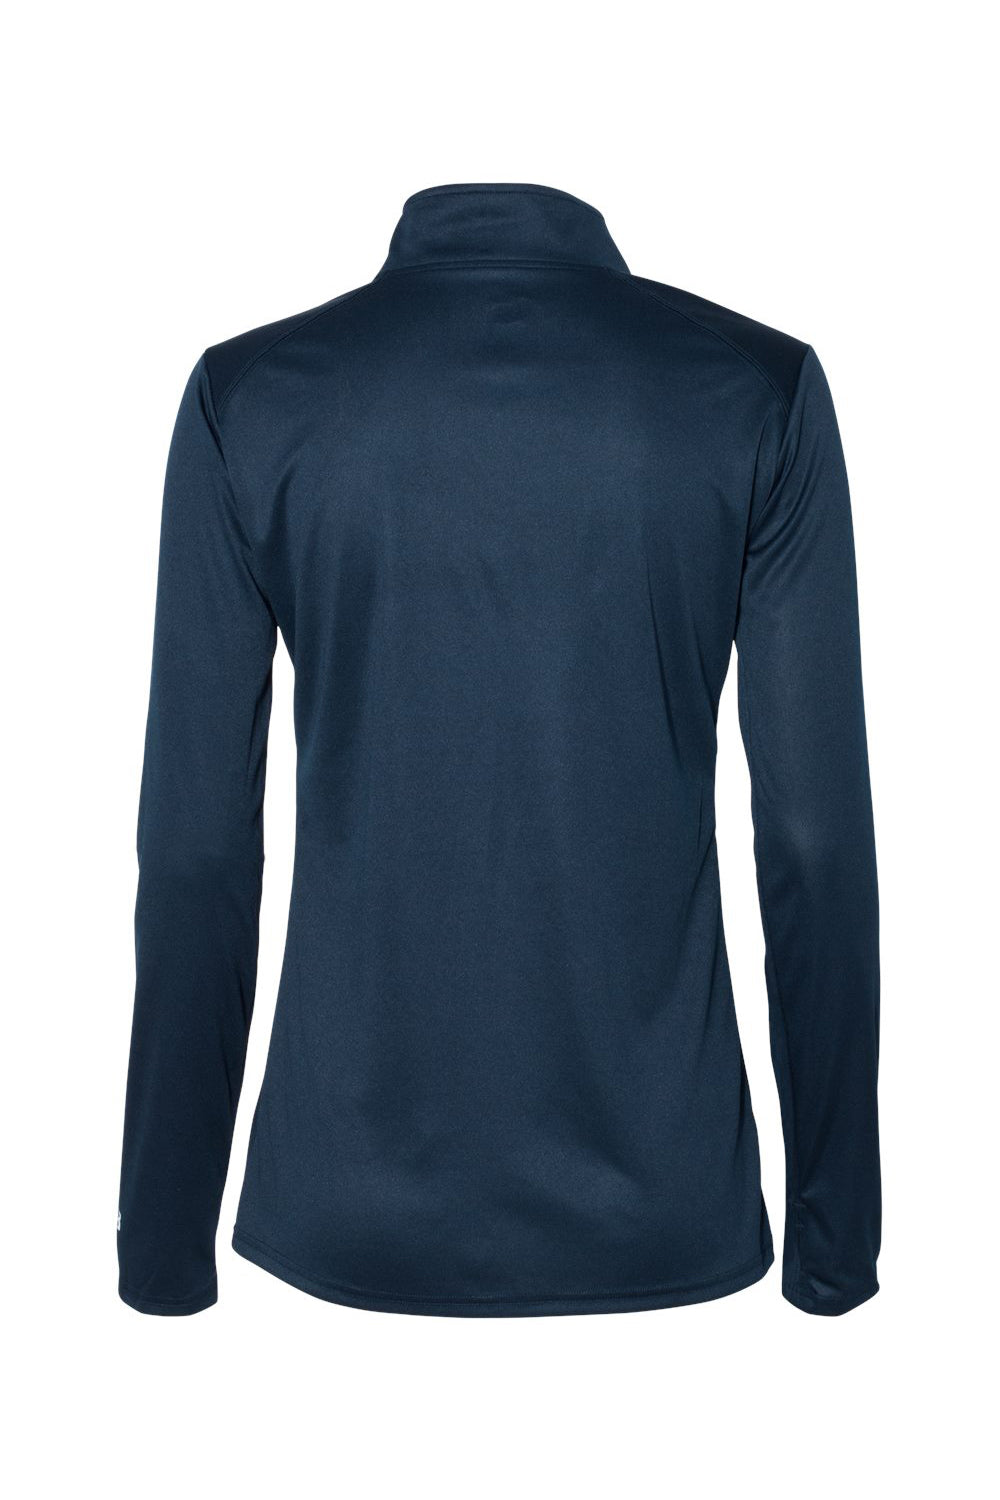 Badger 4103 Womens B-Core Moisture Wicking 1/4 Zip Pullover Navy Blue/Graphite Grey Flat Back